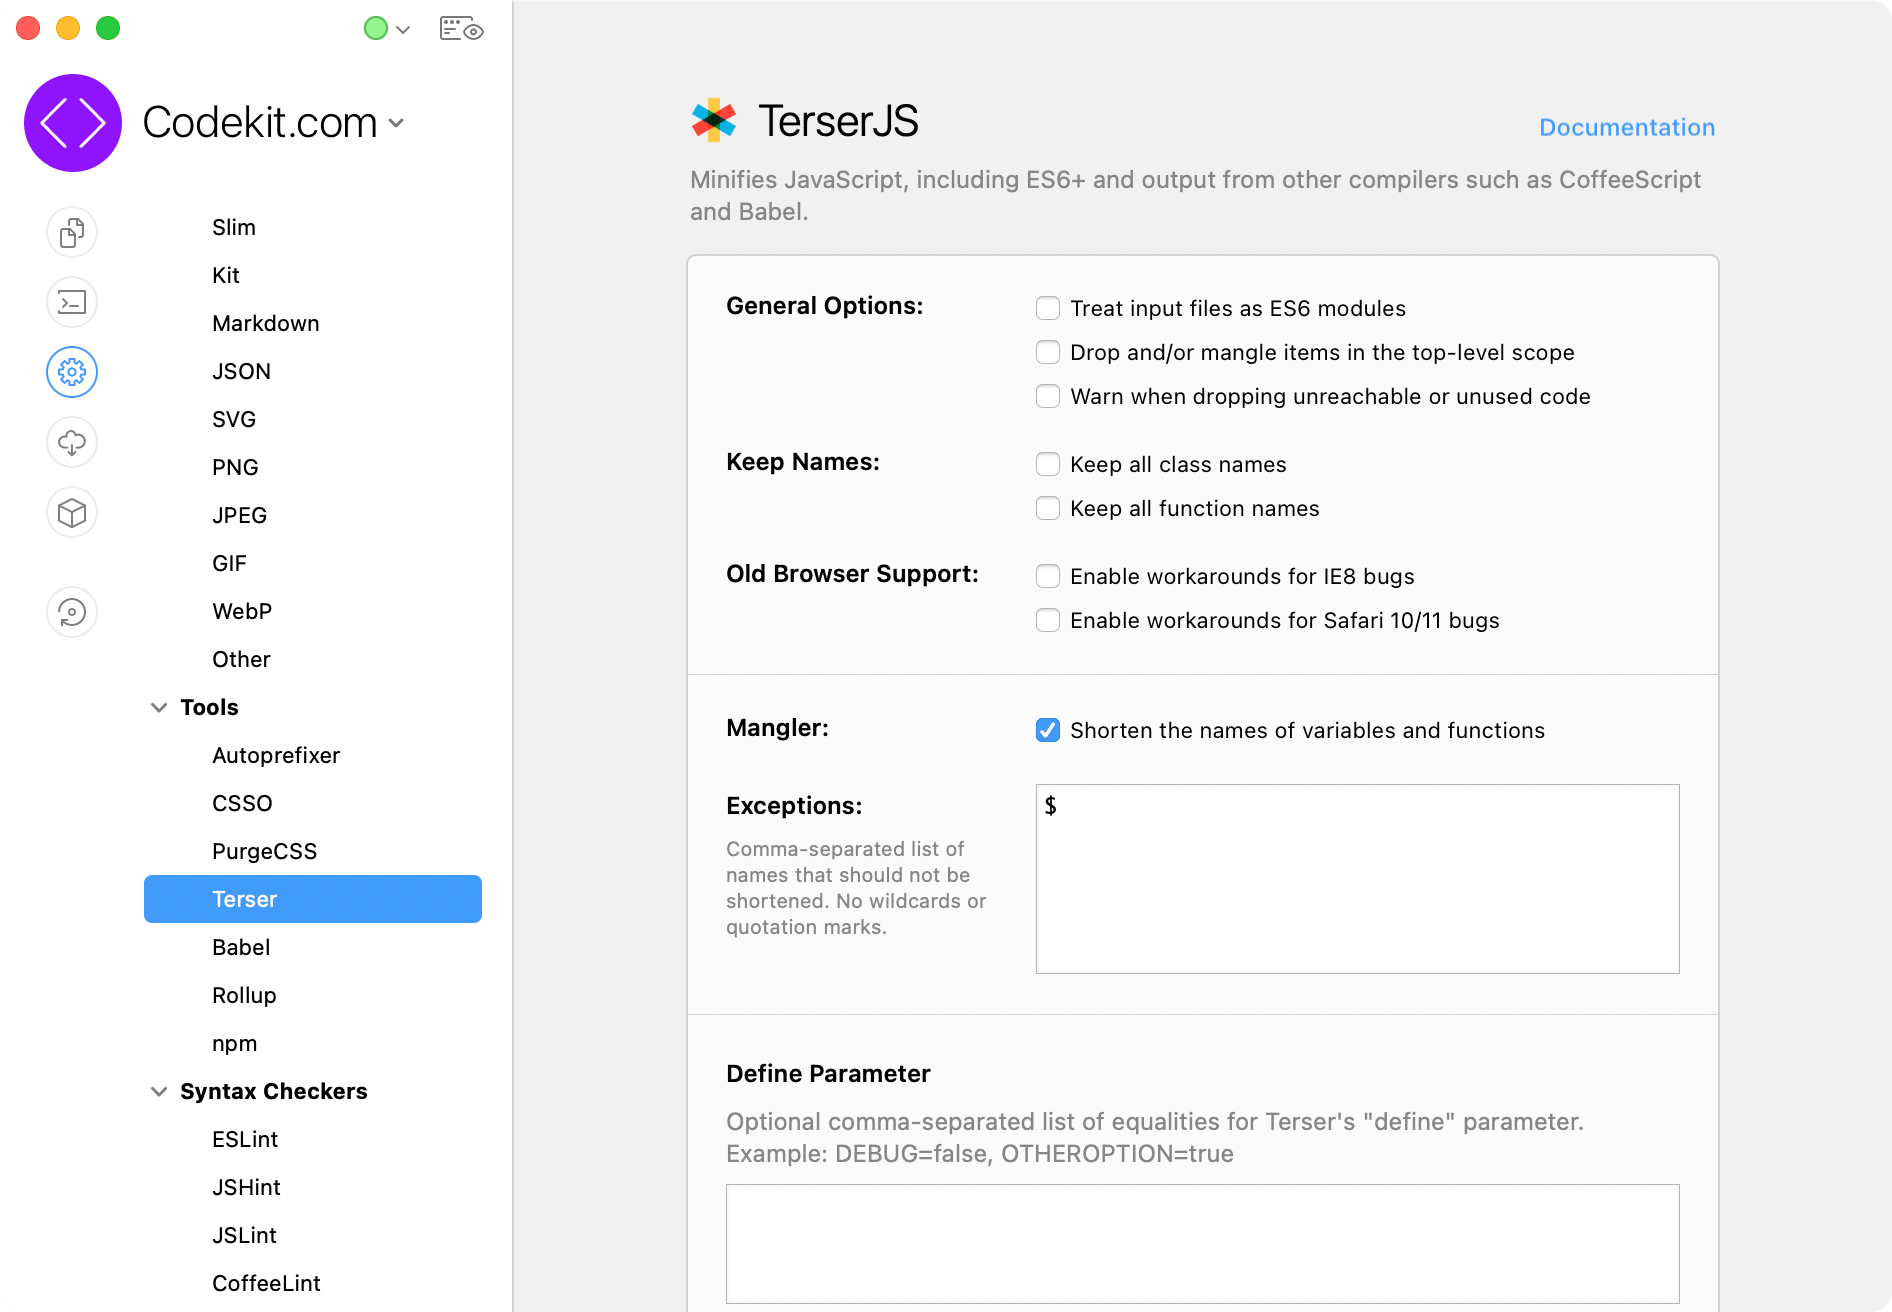 A screenshot of the CodeKit app window showing TerserJS settings.